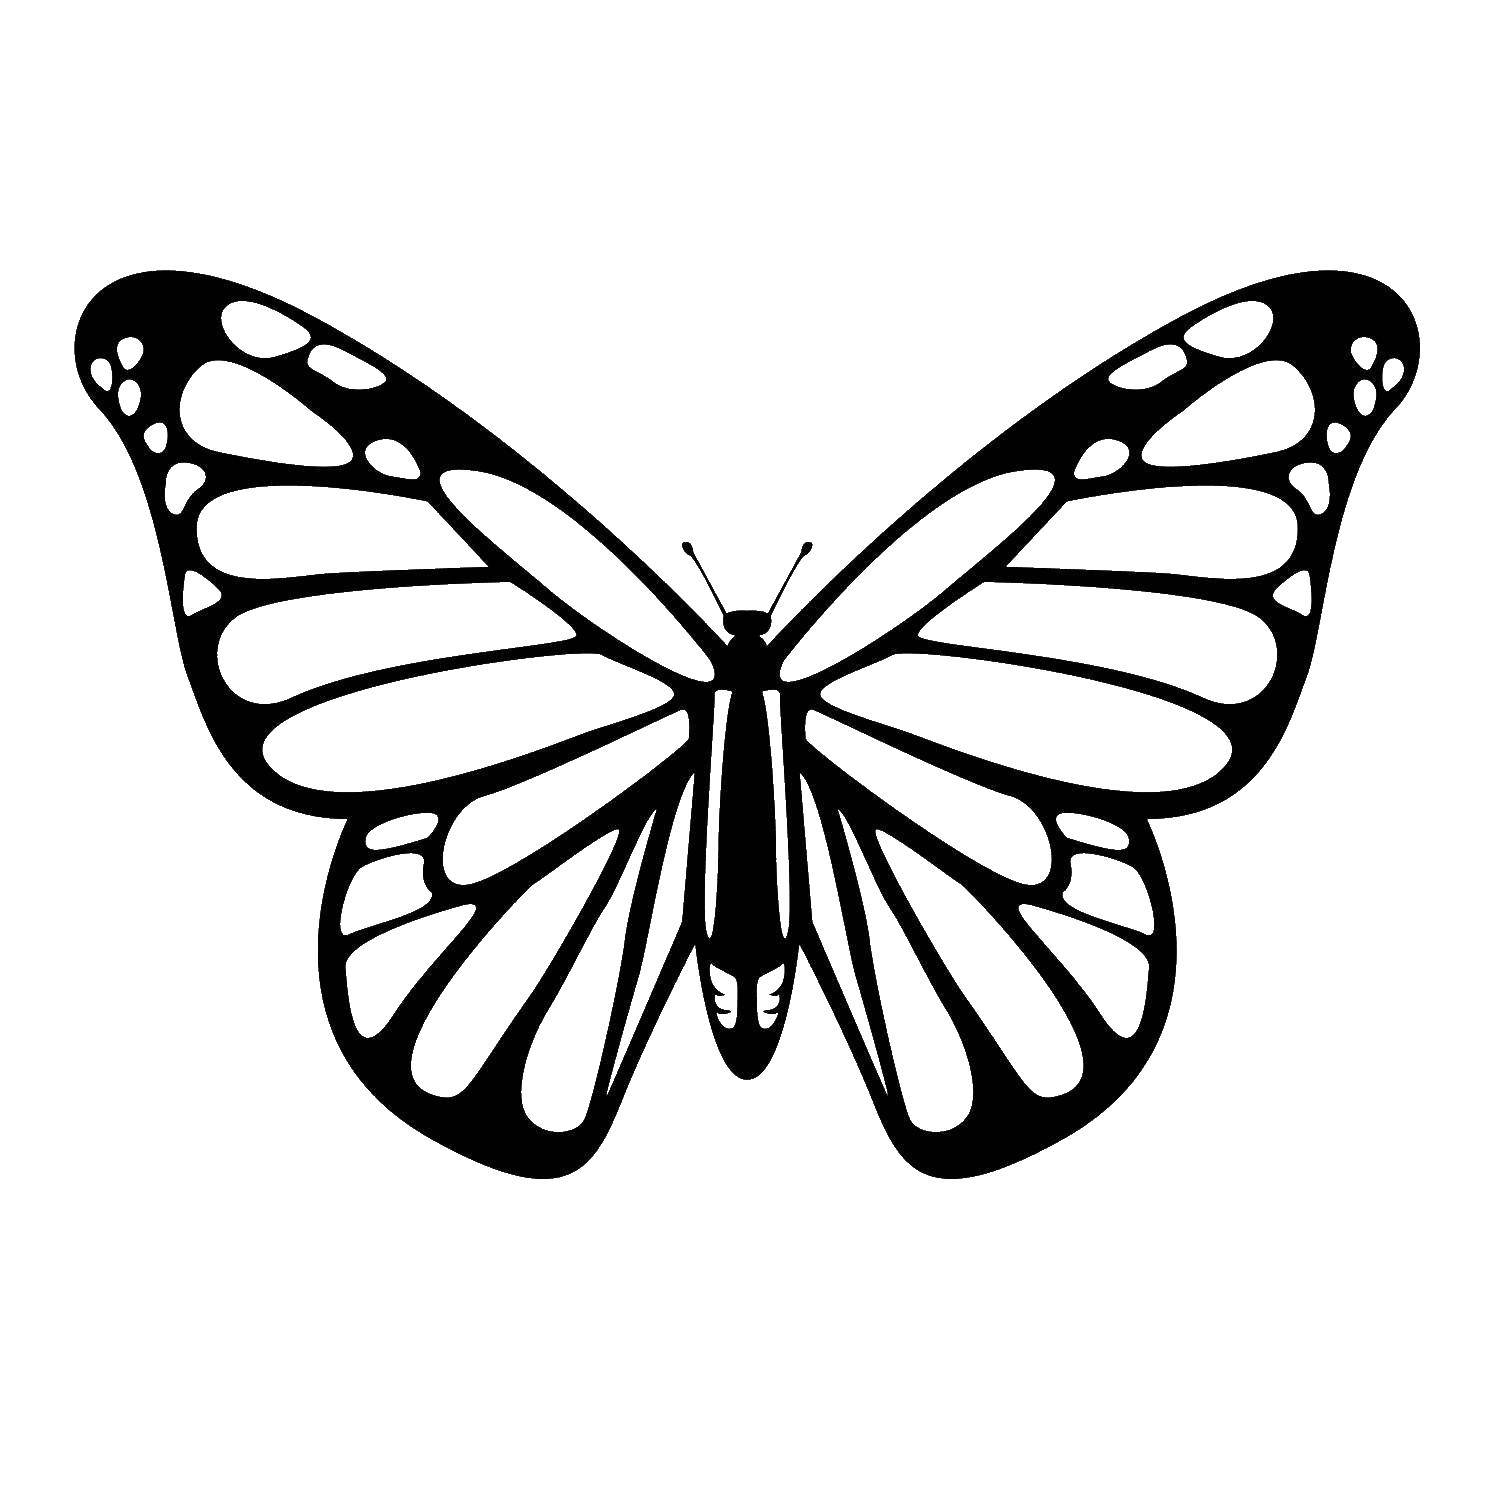 Название: Раскраска Бабочка  с большими крылышками. Категория: бабочка. Теги: Бабочка.